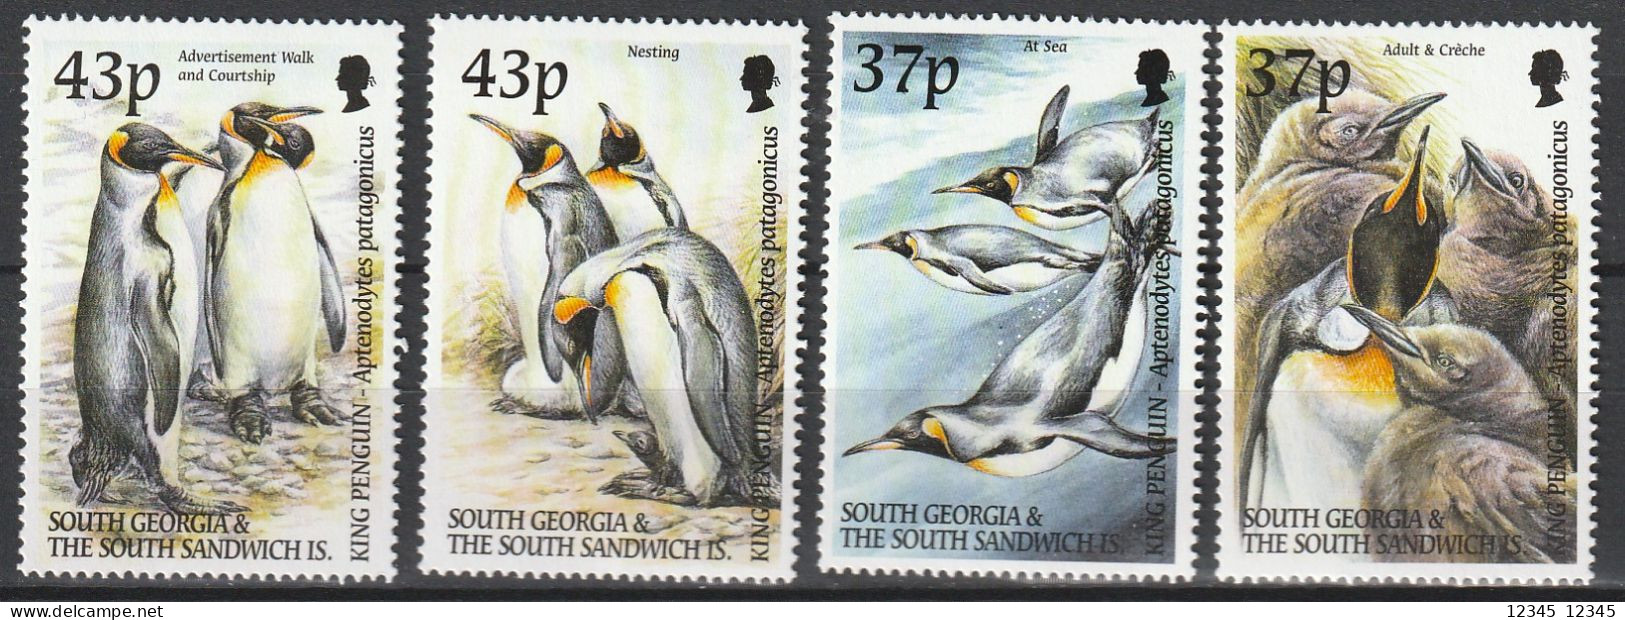 Zuid Georgië 2000, Postfris MNH, Birds, Penguin - South Georgia